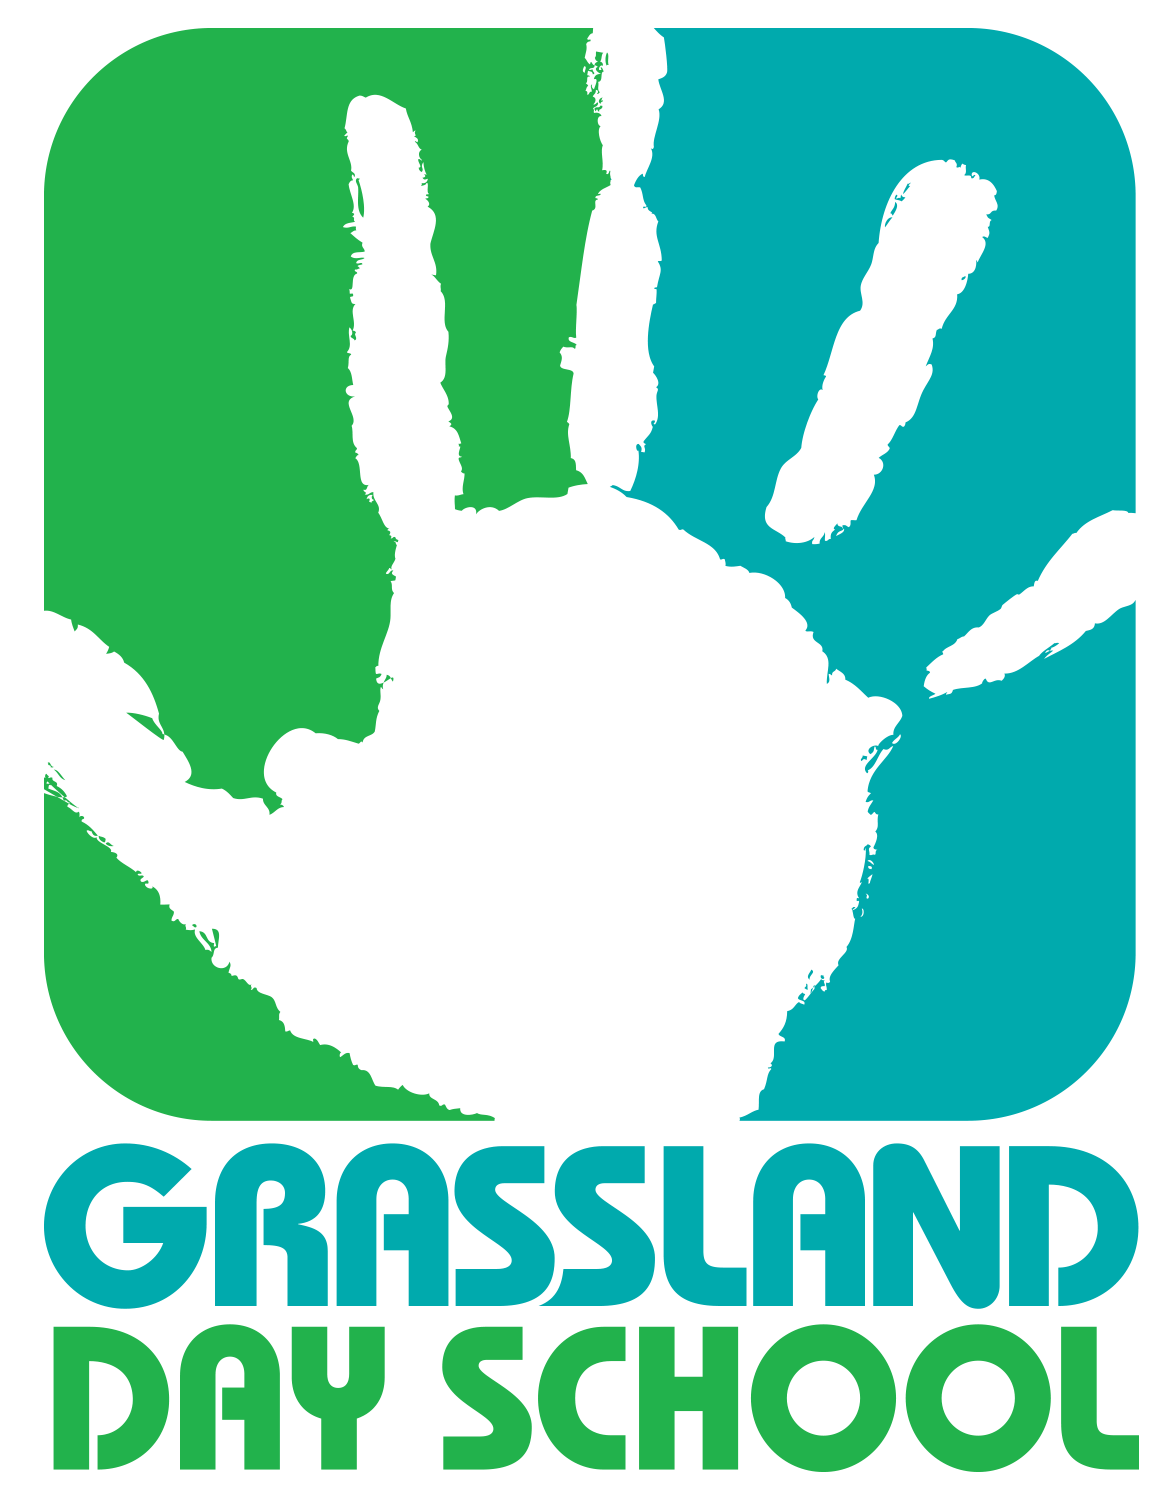 Grassland Day School Logo